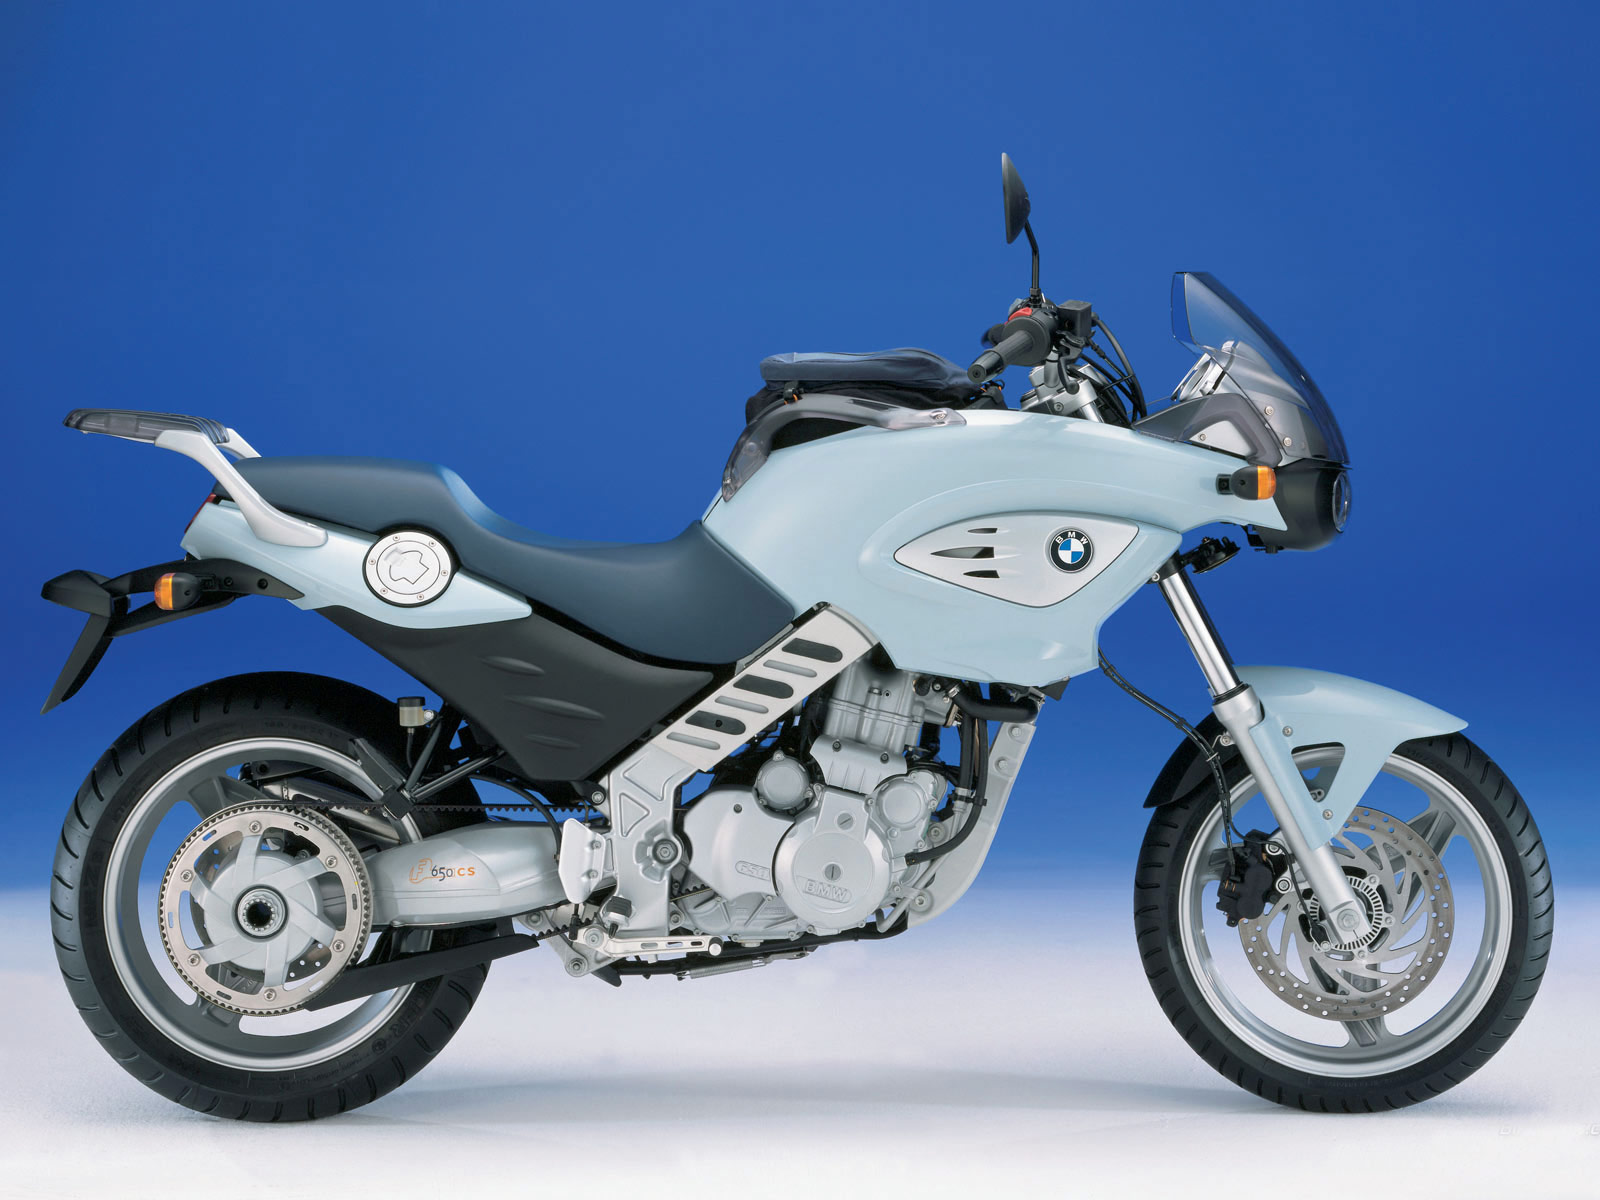 2001 F650CS BMW motorcycle, insurance information, bmw automotive